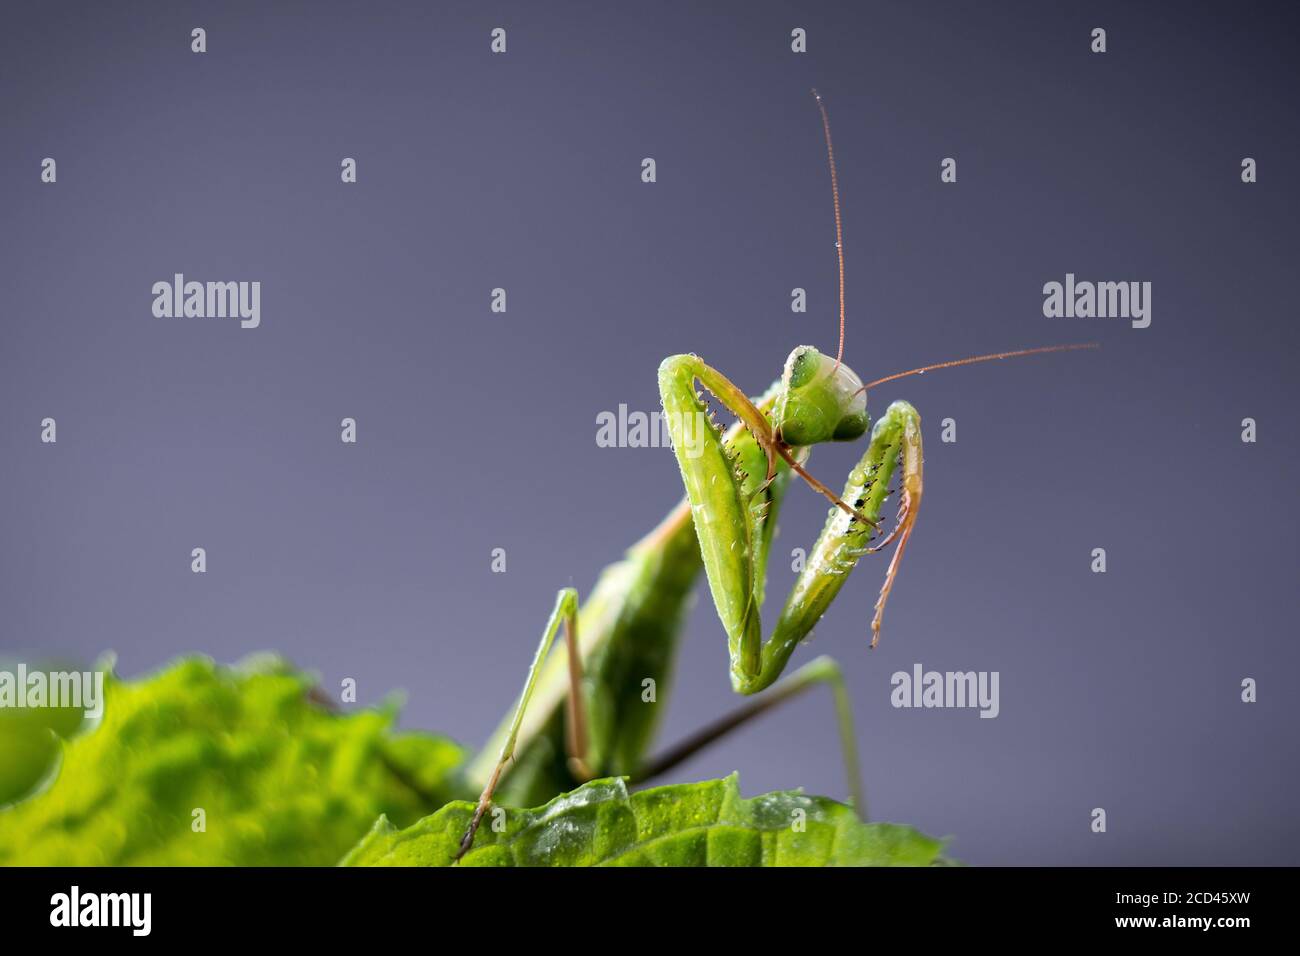 European Praying Mantis female or Mantis religiosa close up against dark background. Large predatory insect Stock Photo